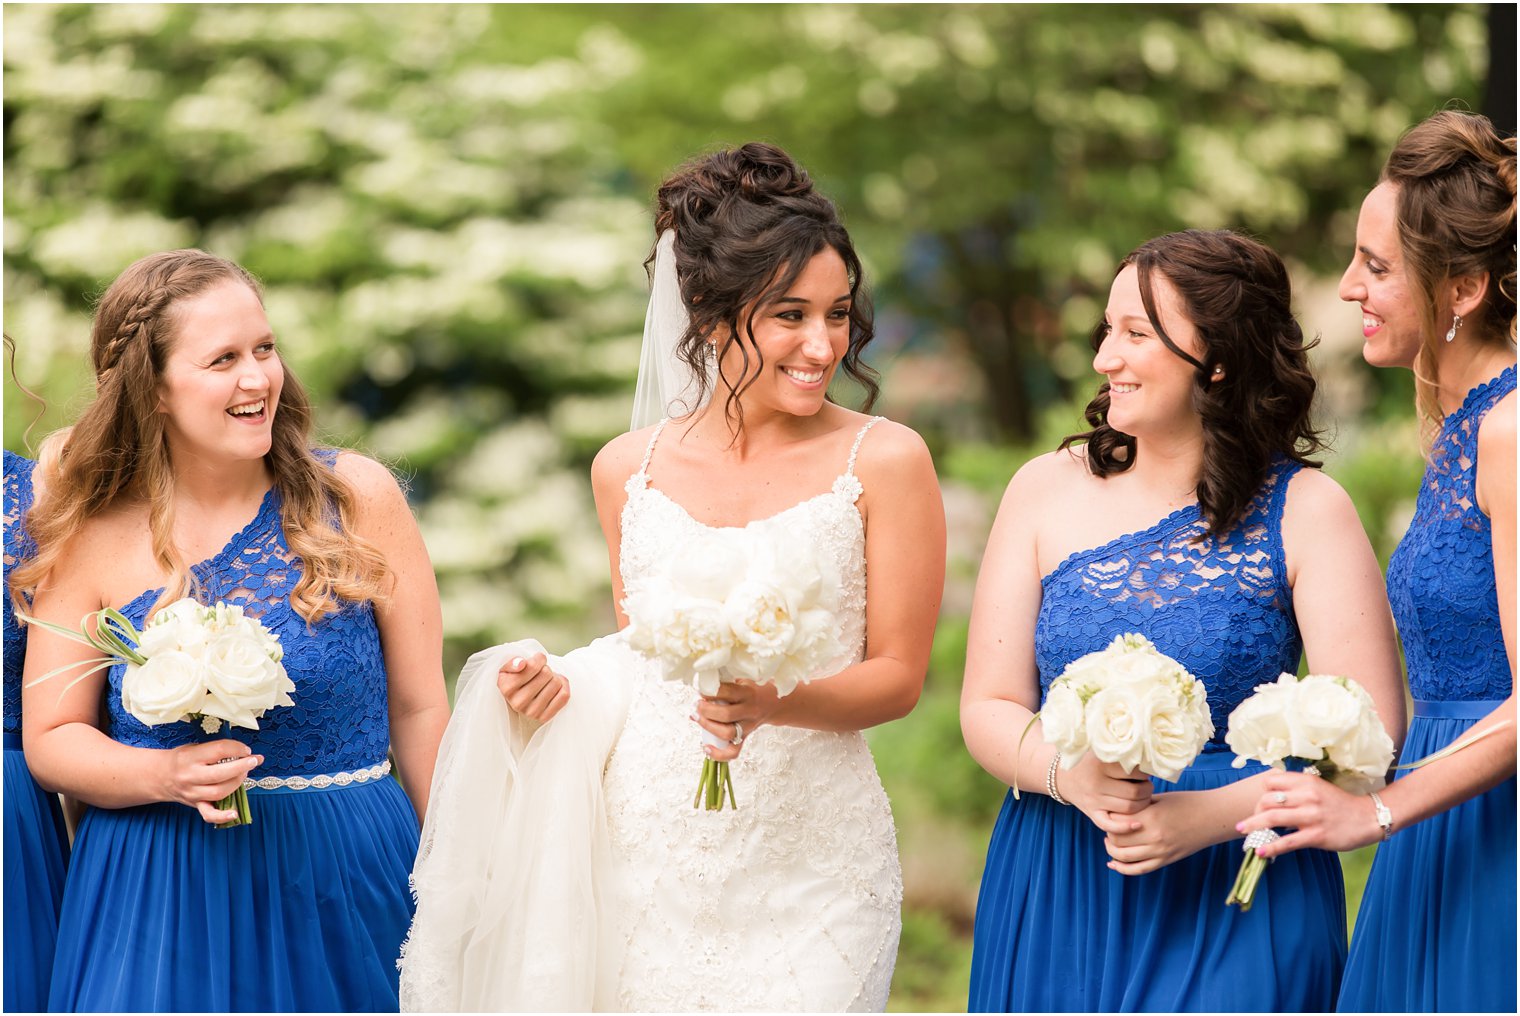 Candid photo of bride and bridesmaids | il Tulipano Wedding